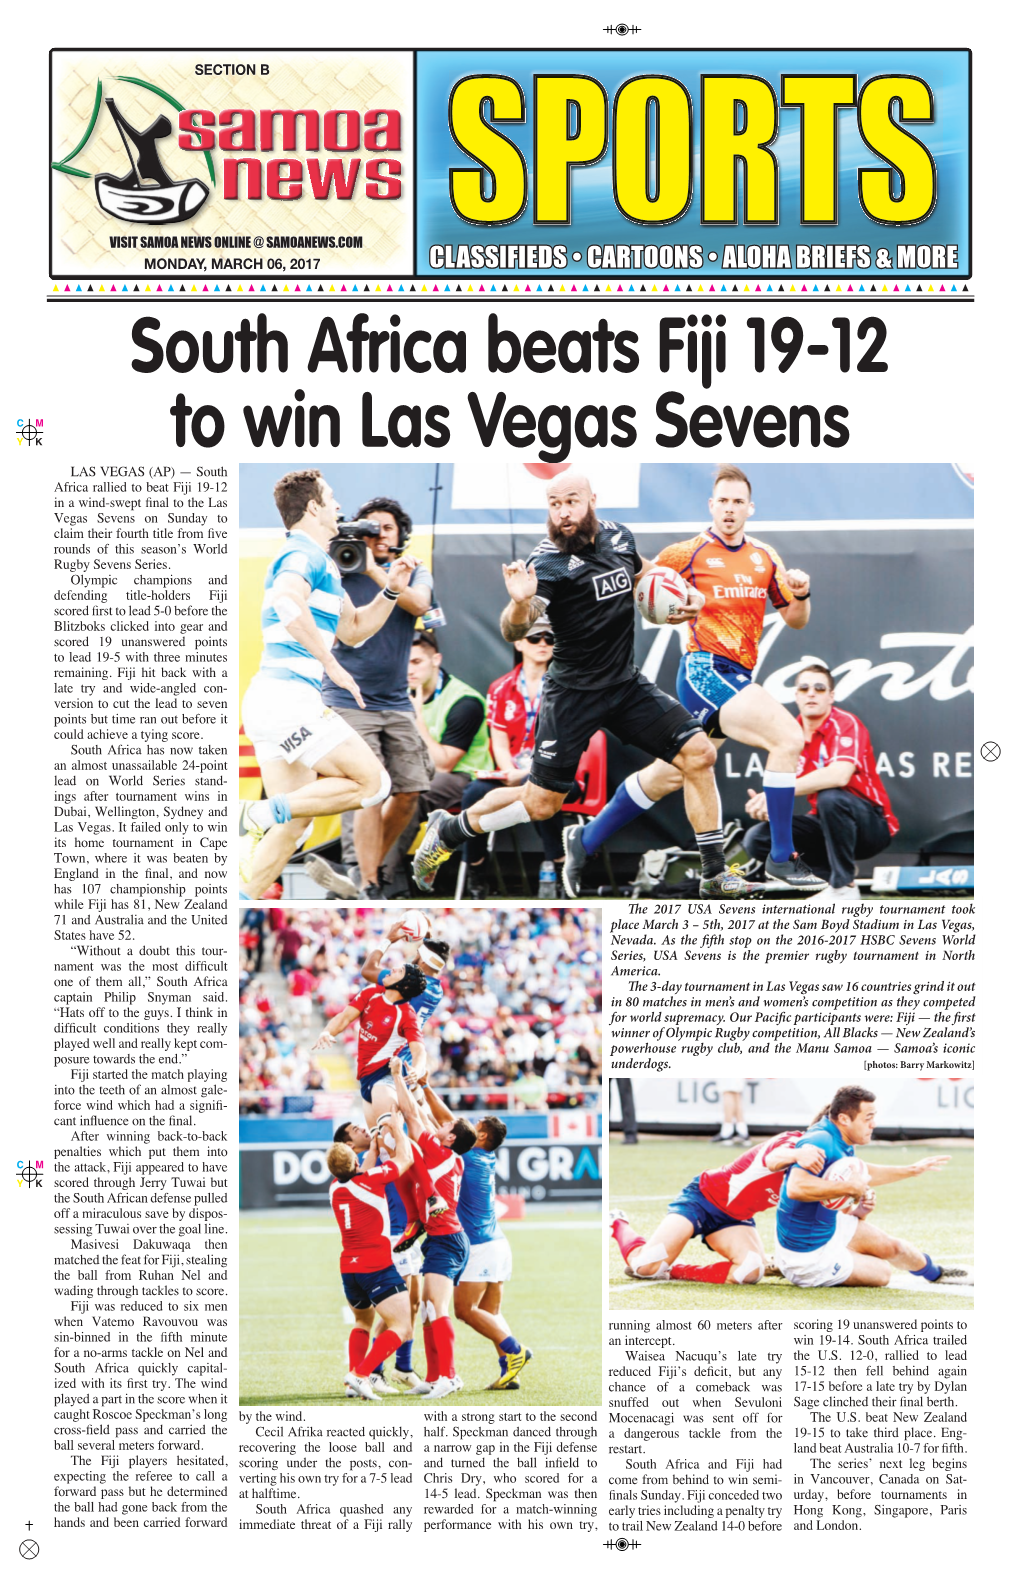 South Africa Beats Fiji 19-12 to Win Las Vegas Sevens